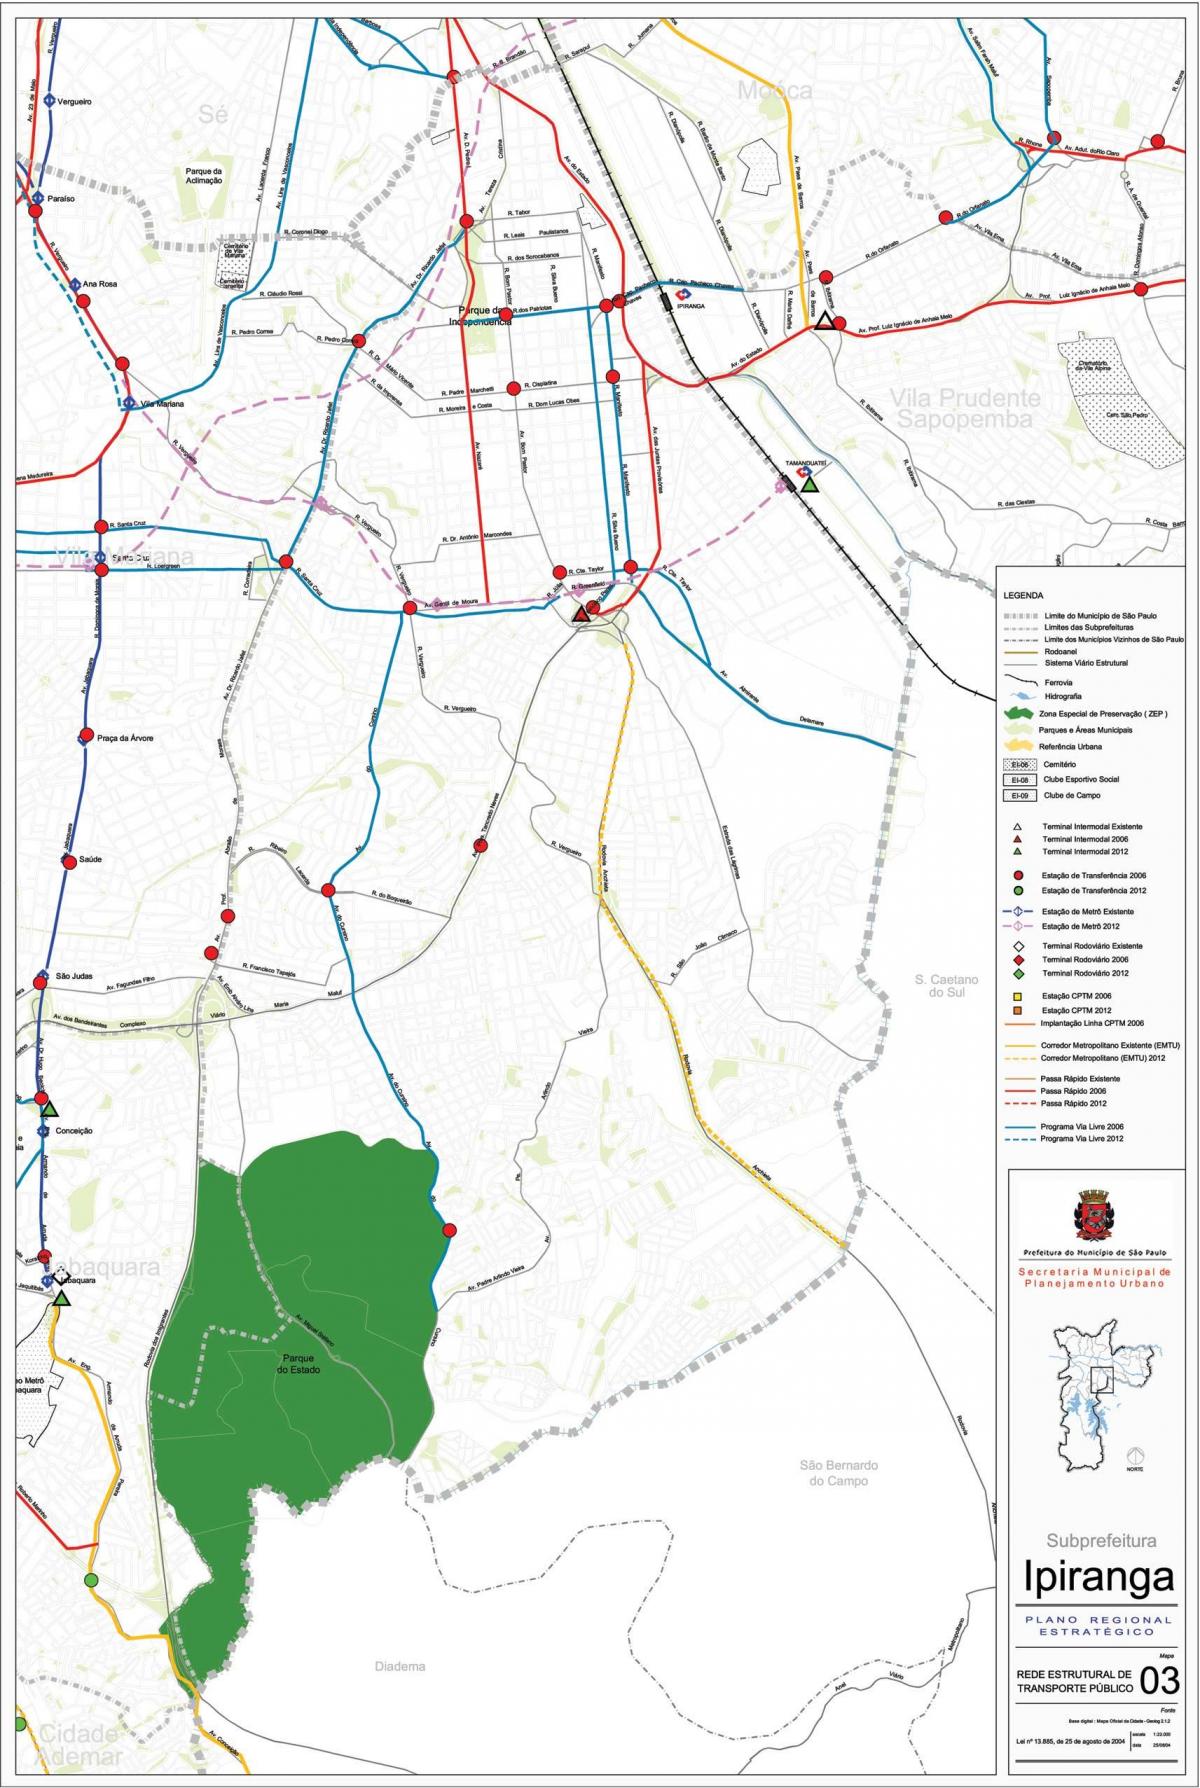 Map of Ipiranga São Paulo - Public transports